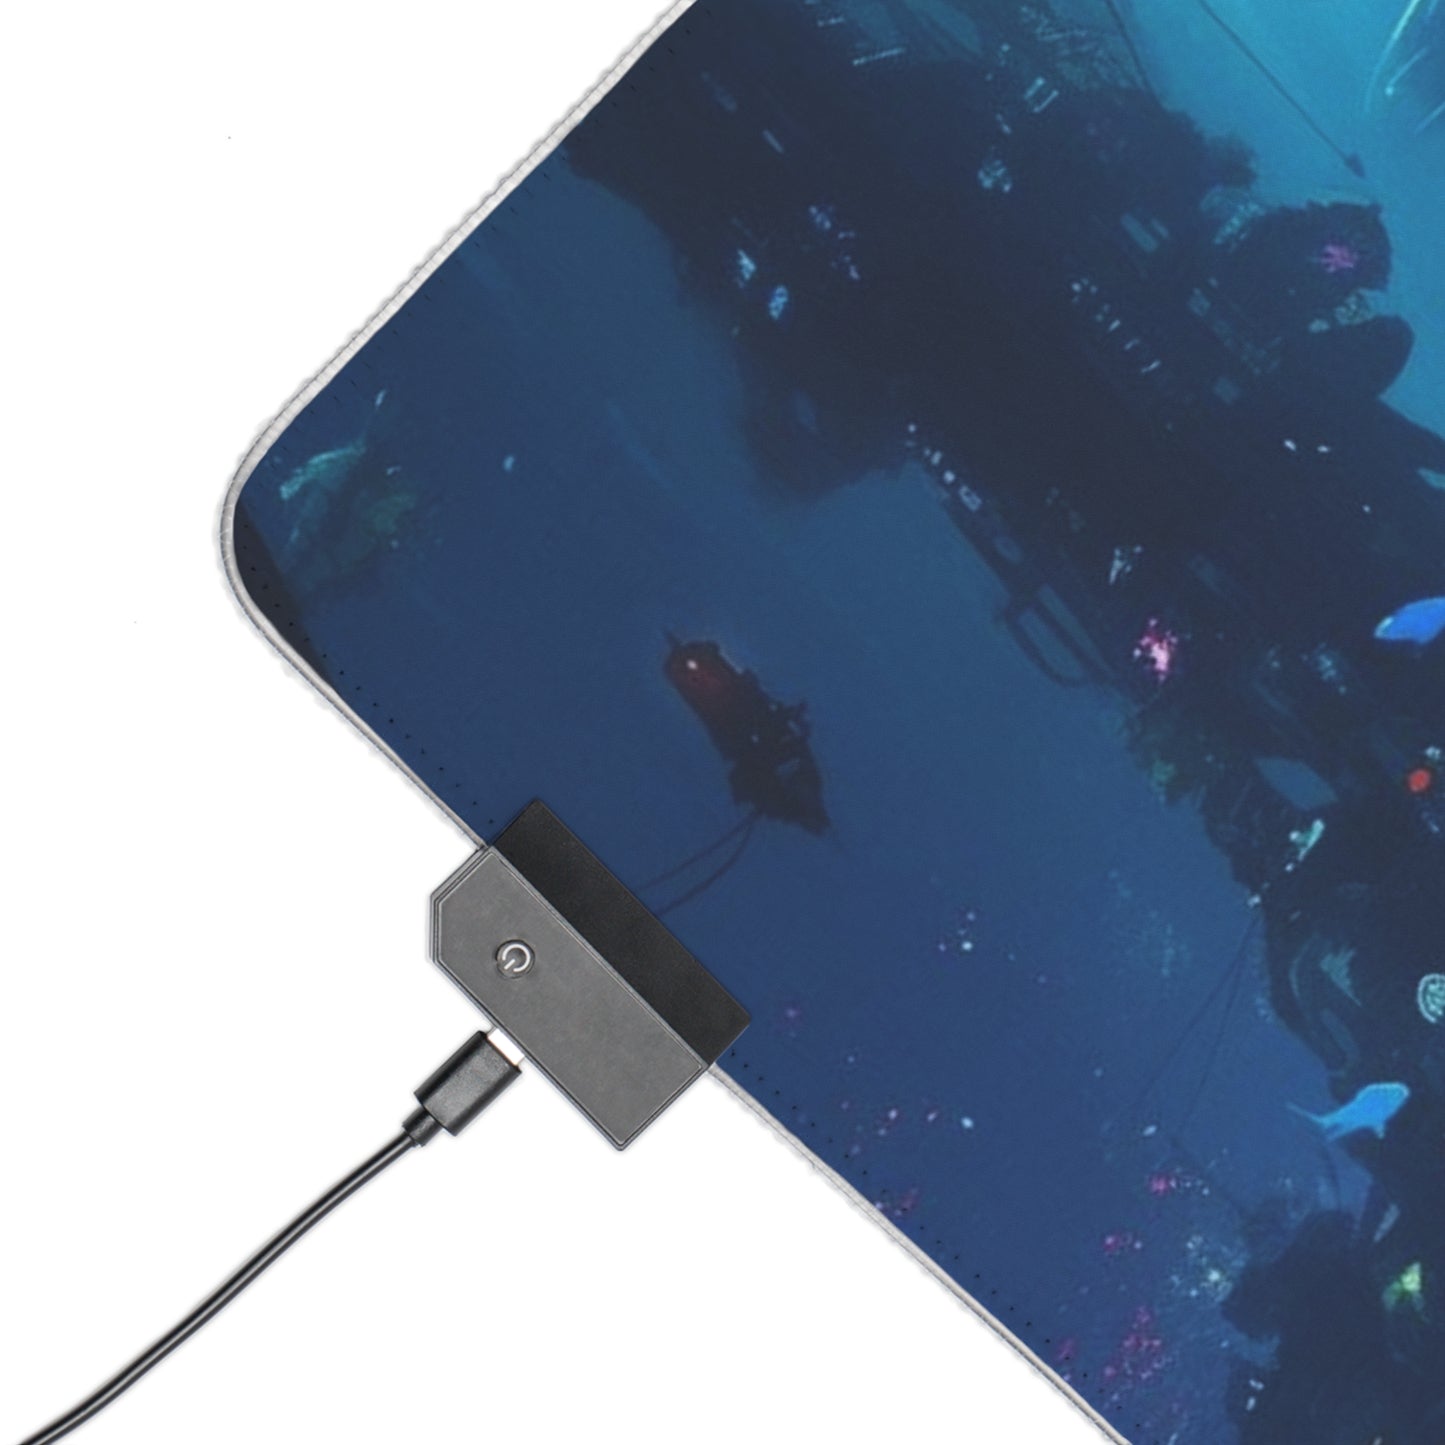 Aquatic Haven-1 LED Gaming Mouse Pad